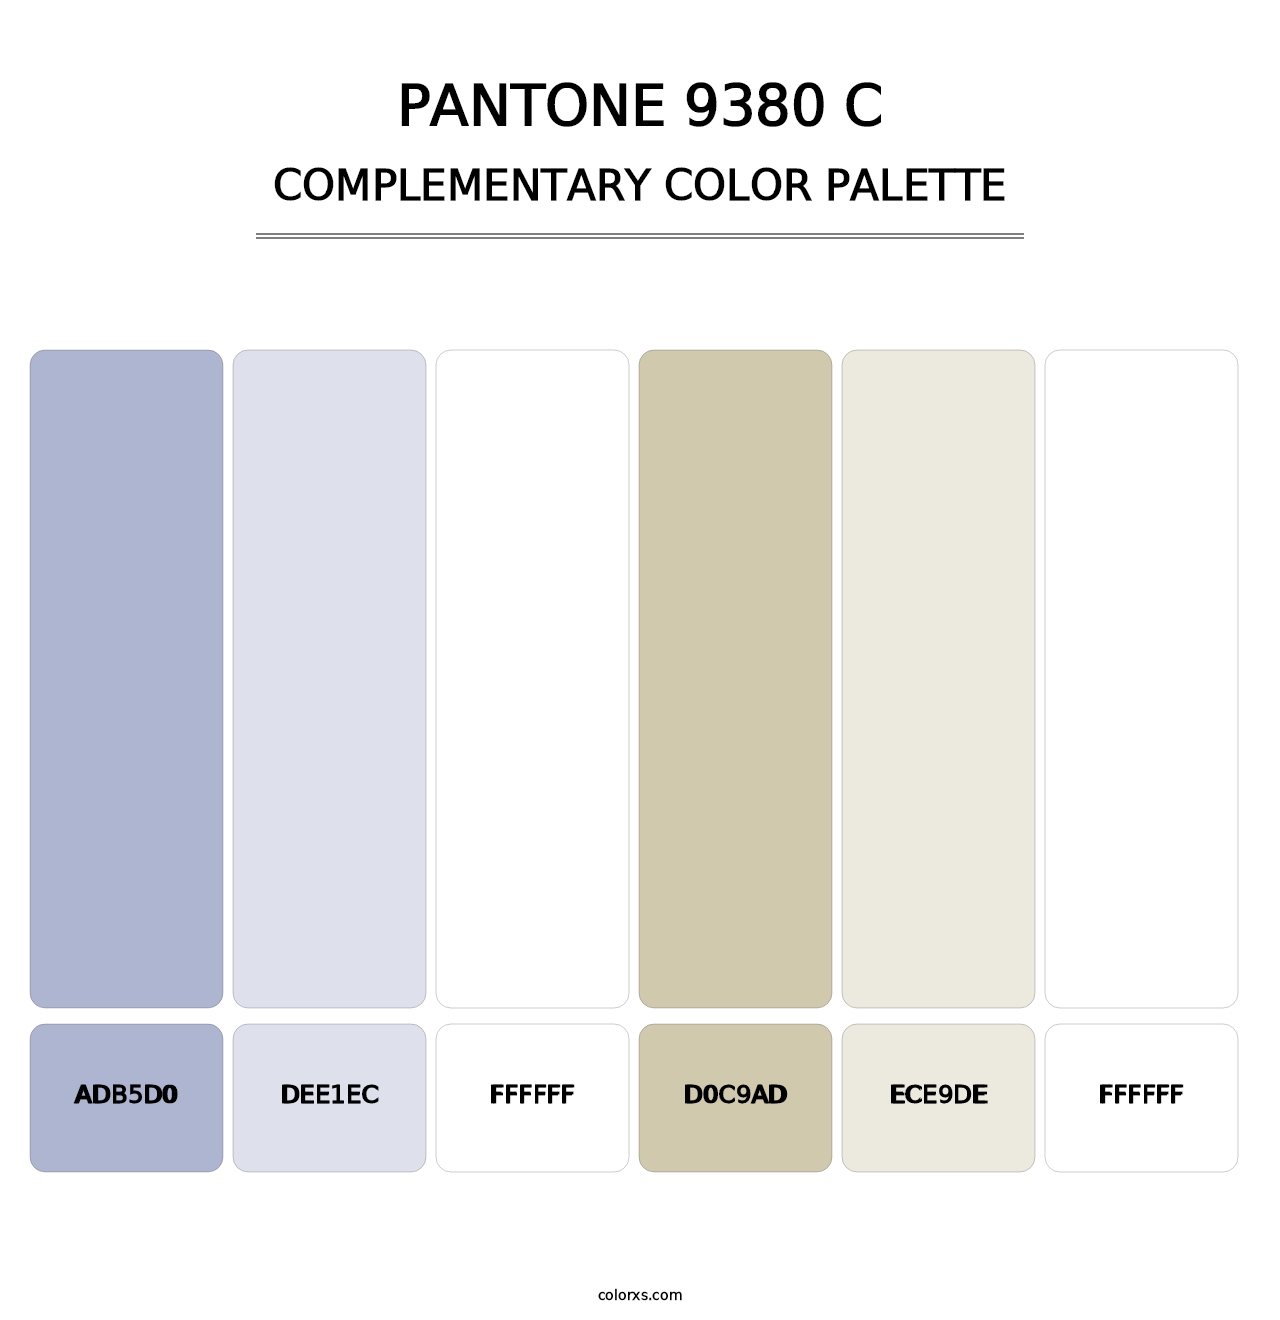 PANTONE 9380 C - Complementary Color Palette